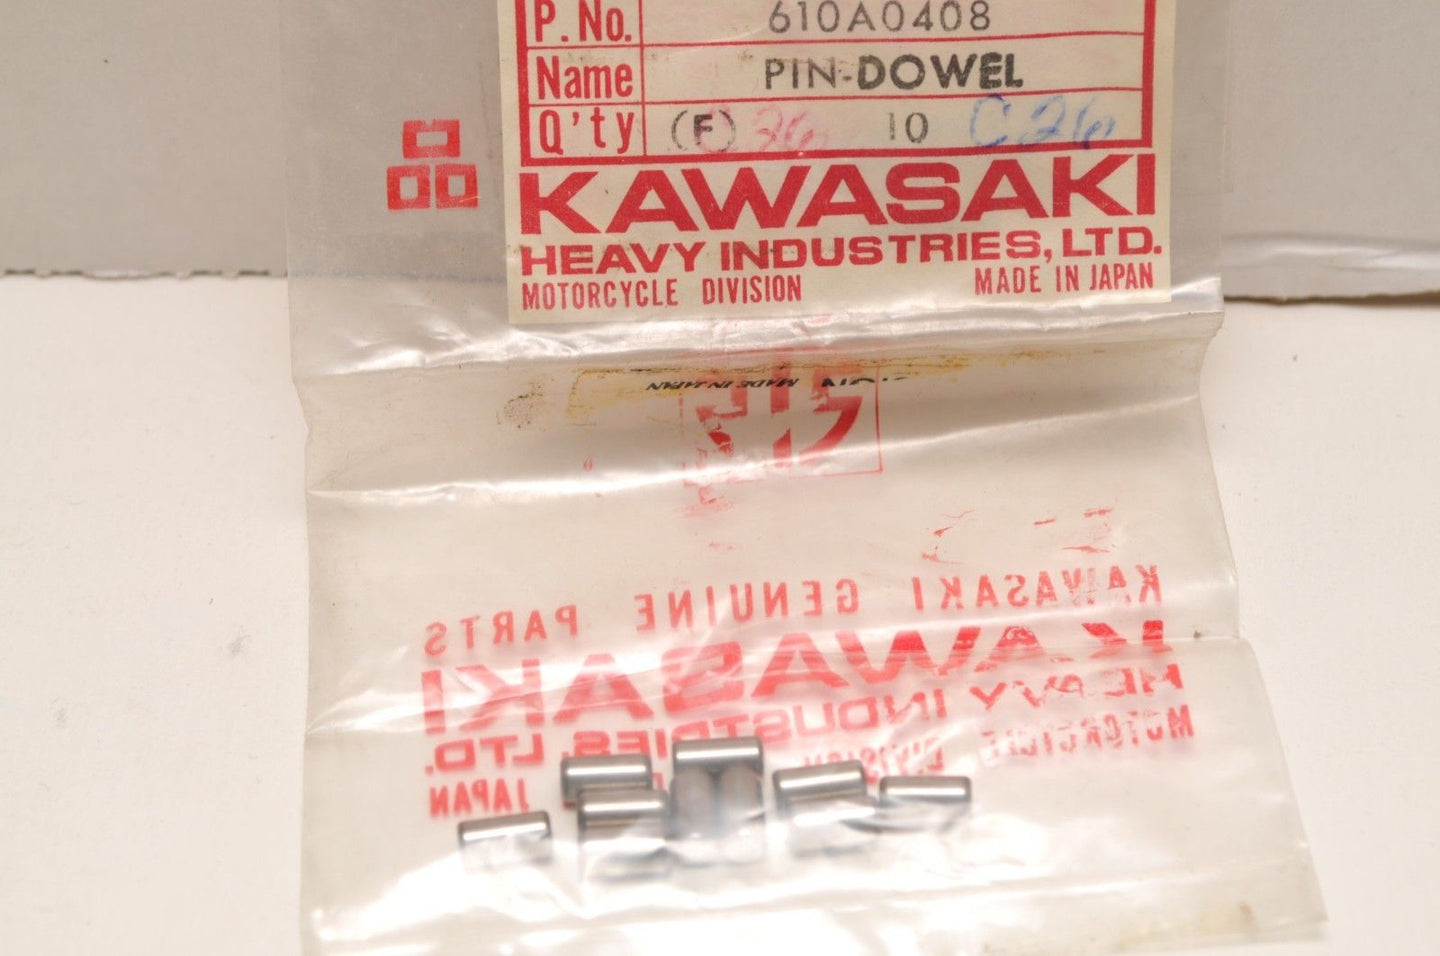 Genuine NOS Kawasaki 610A0408 Dowel Pins Pin Qty:10 Ten - 4x8 KLR250 KL600 KZ400